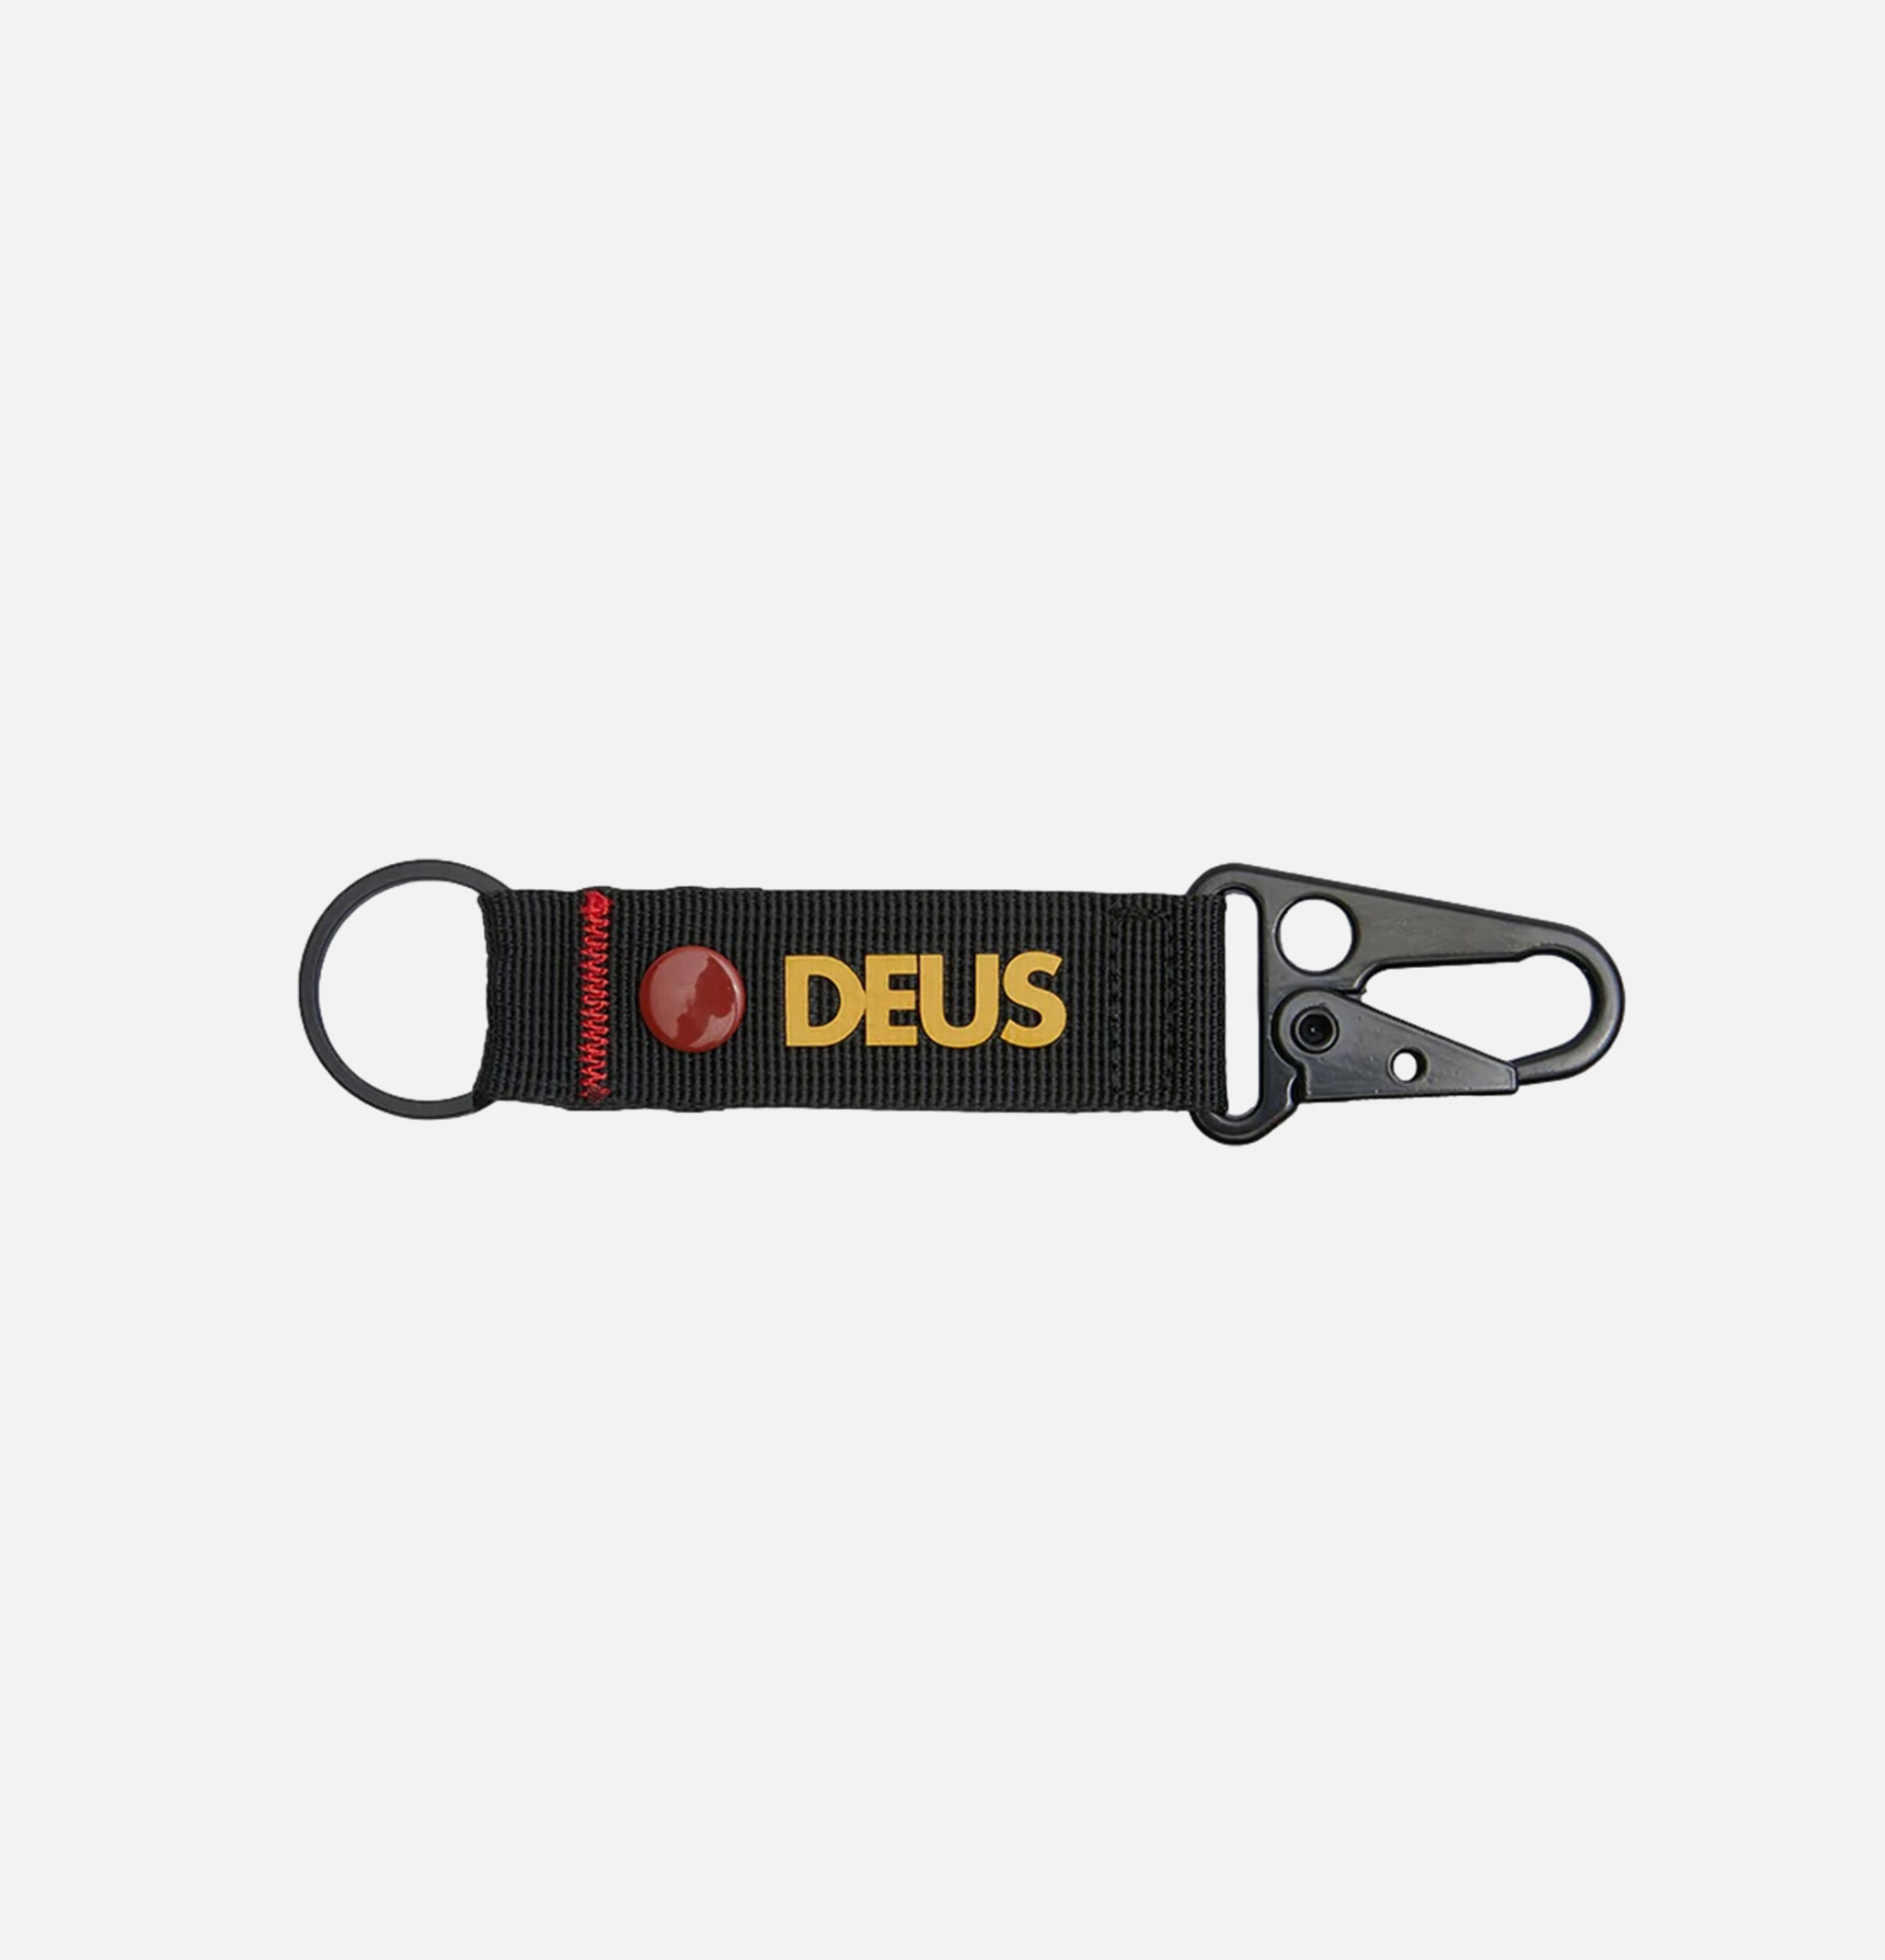 Deus Fortuity Black key holder